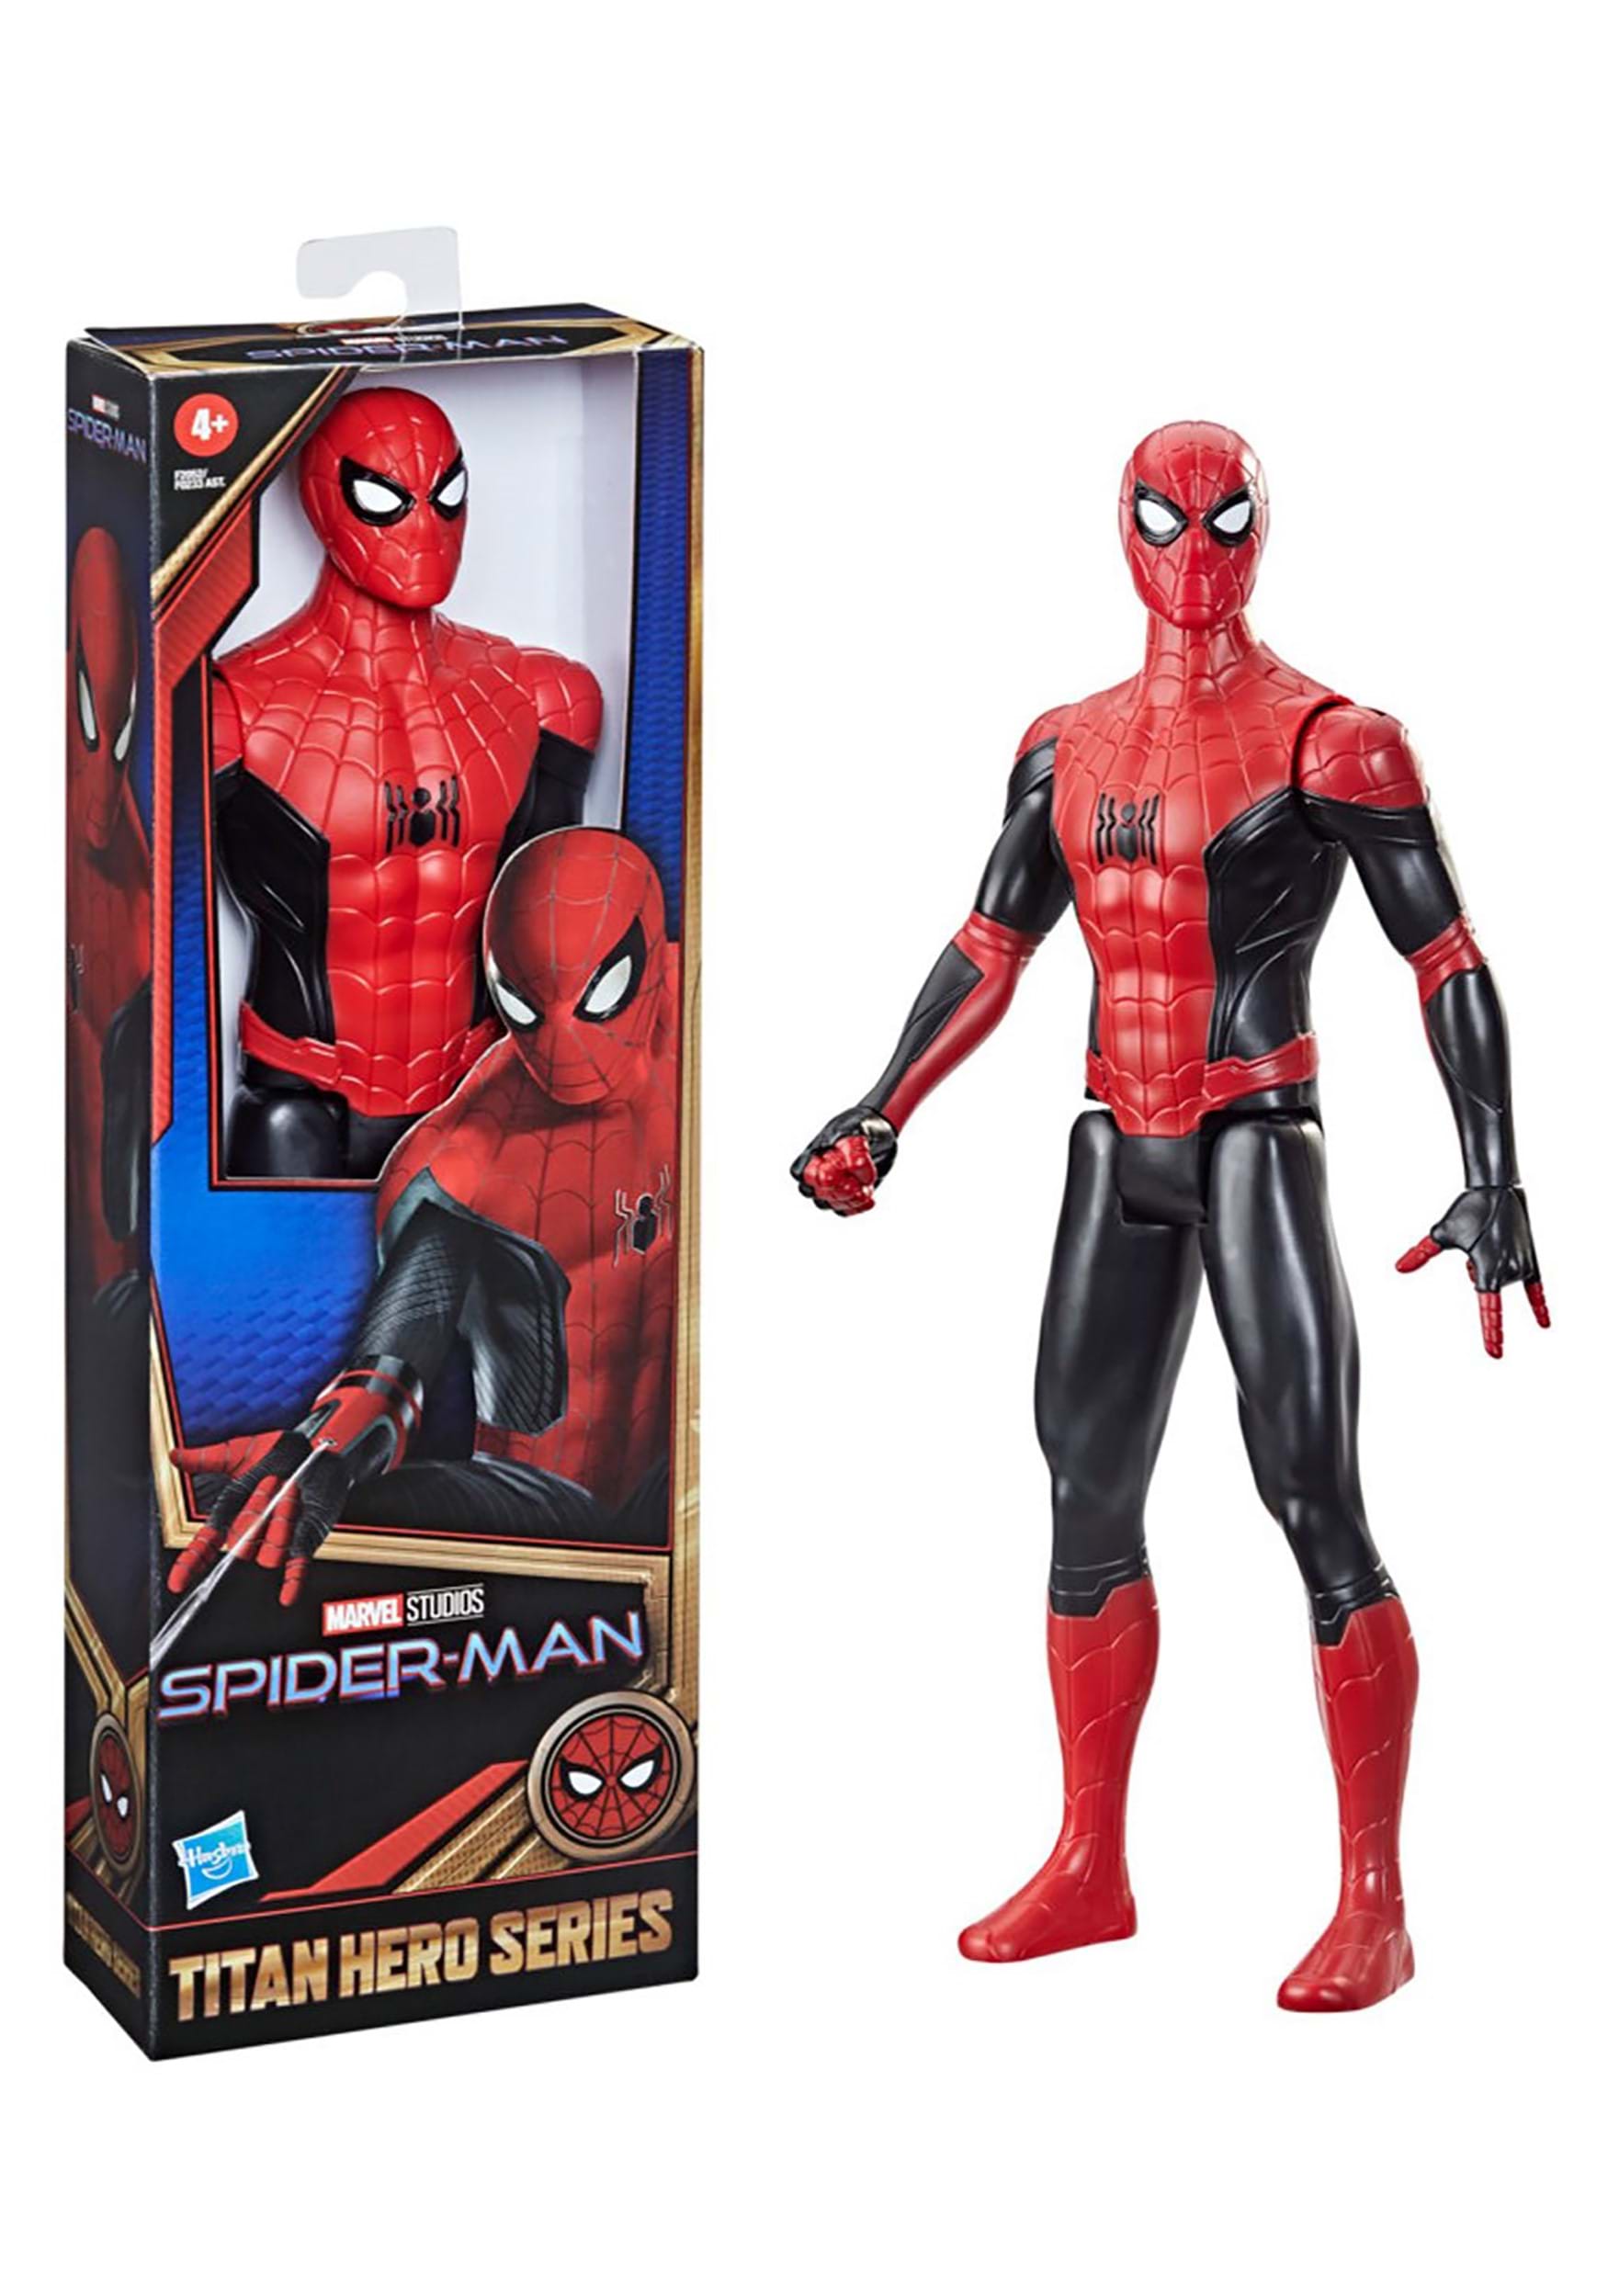 black spiderman vs red spiderman